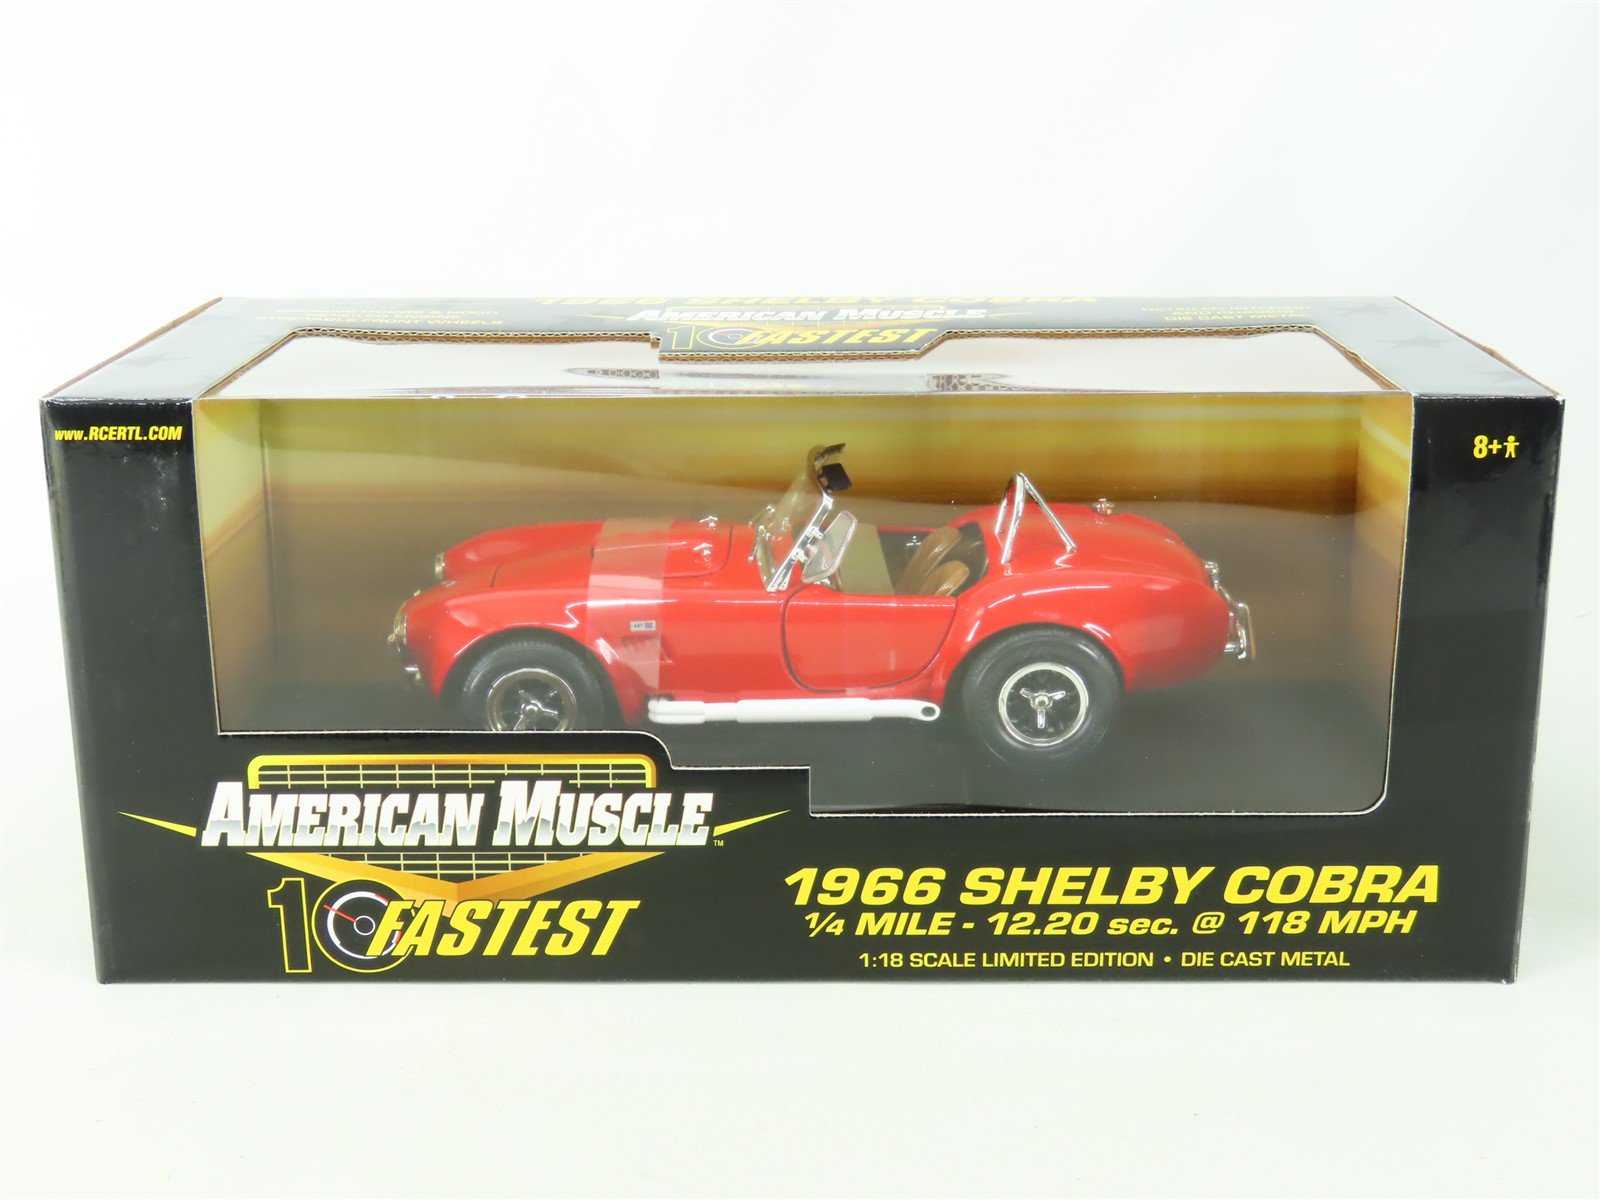 1:18 Scale Ertl American Muscle 10 Fastest Die-Cast 32760 1966 Shelby Cobra